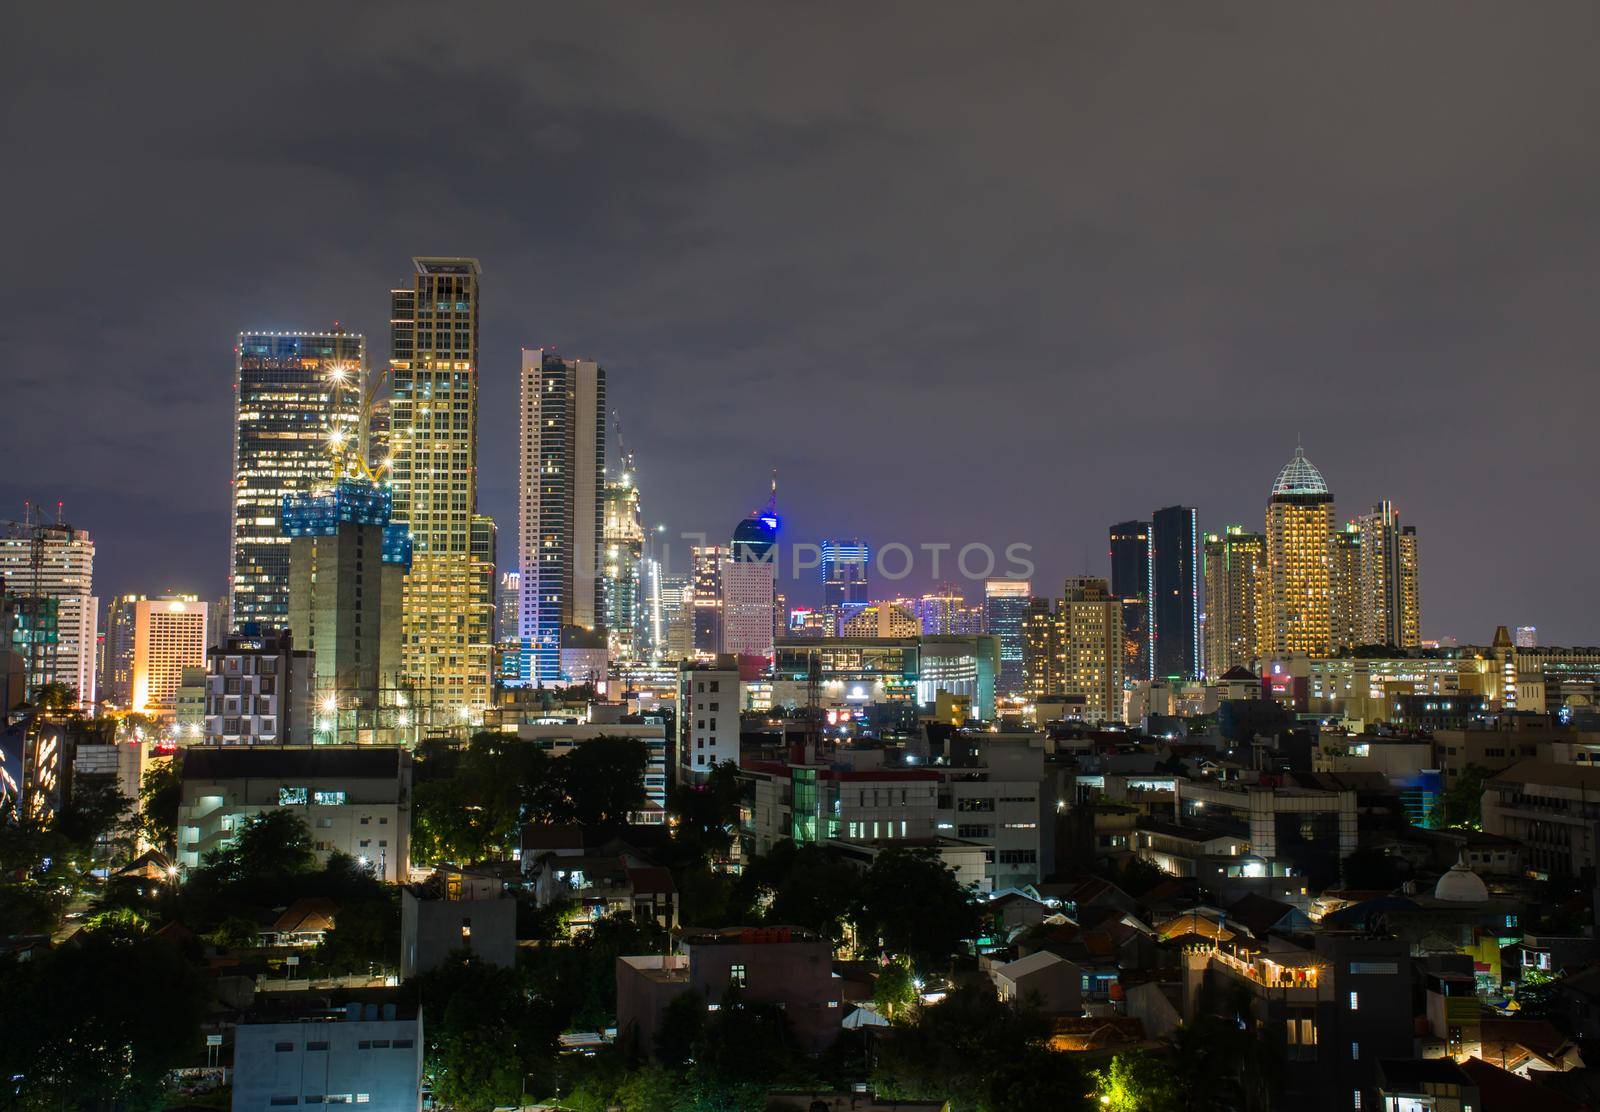 Night panorama of the capital of Indonesia - Jakarta